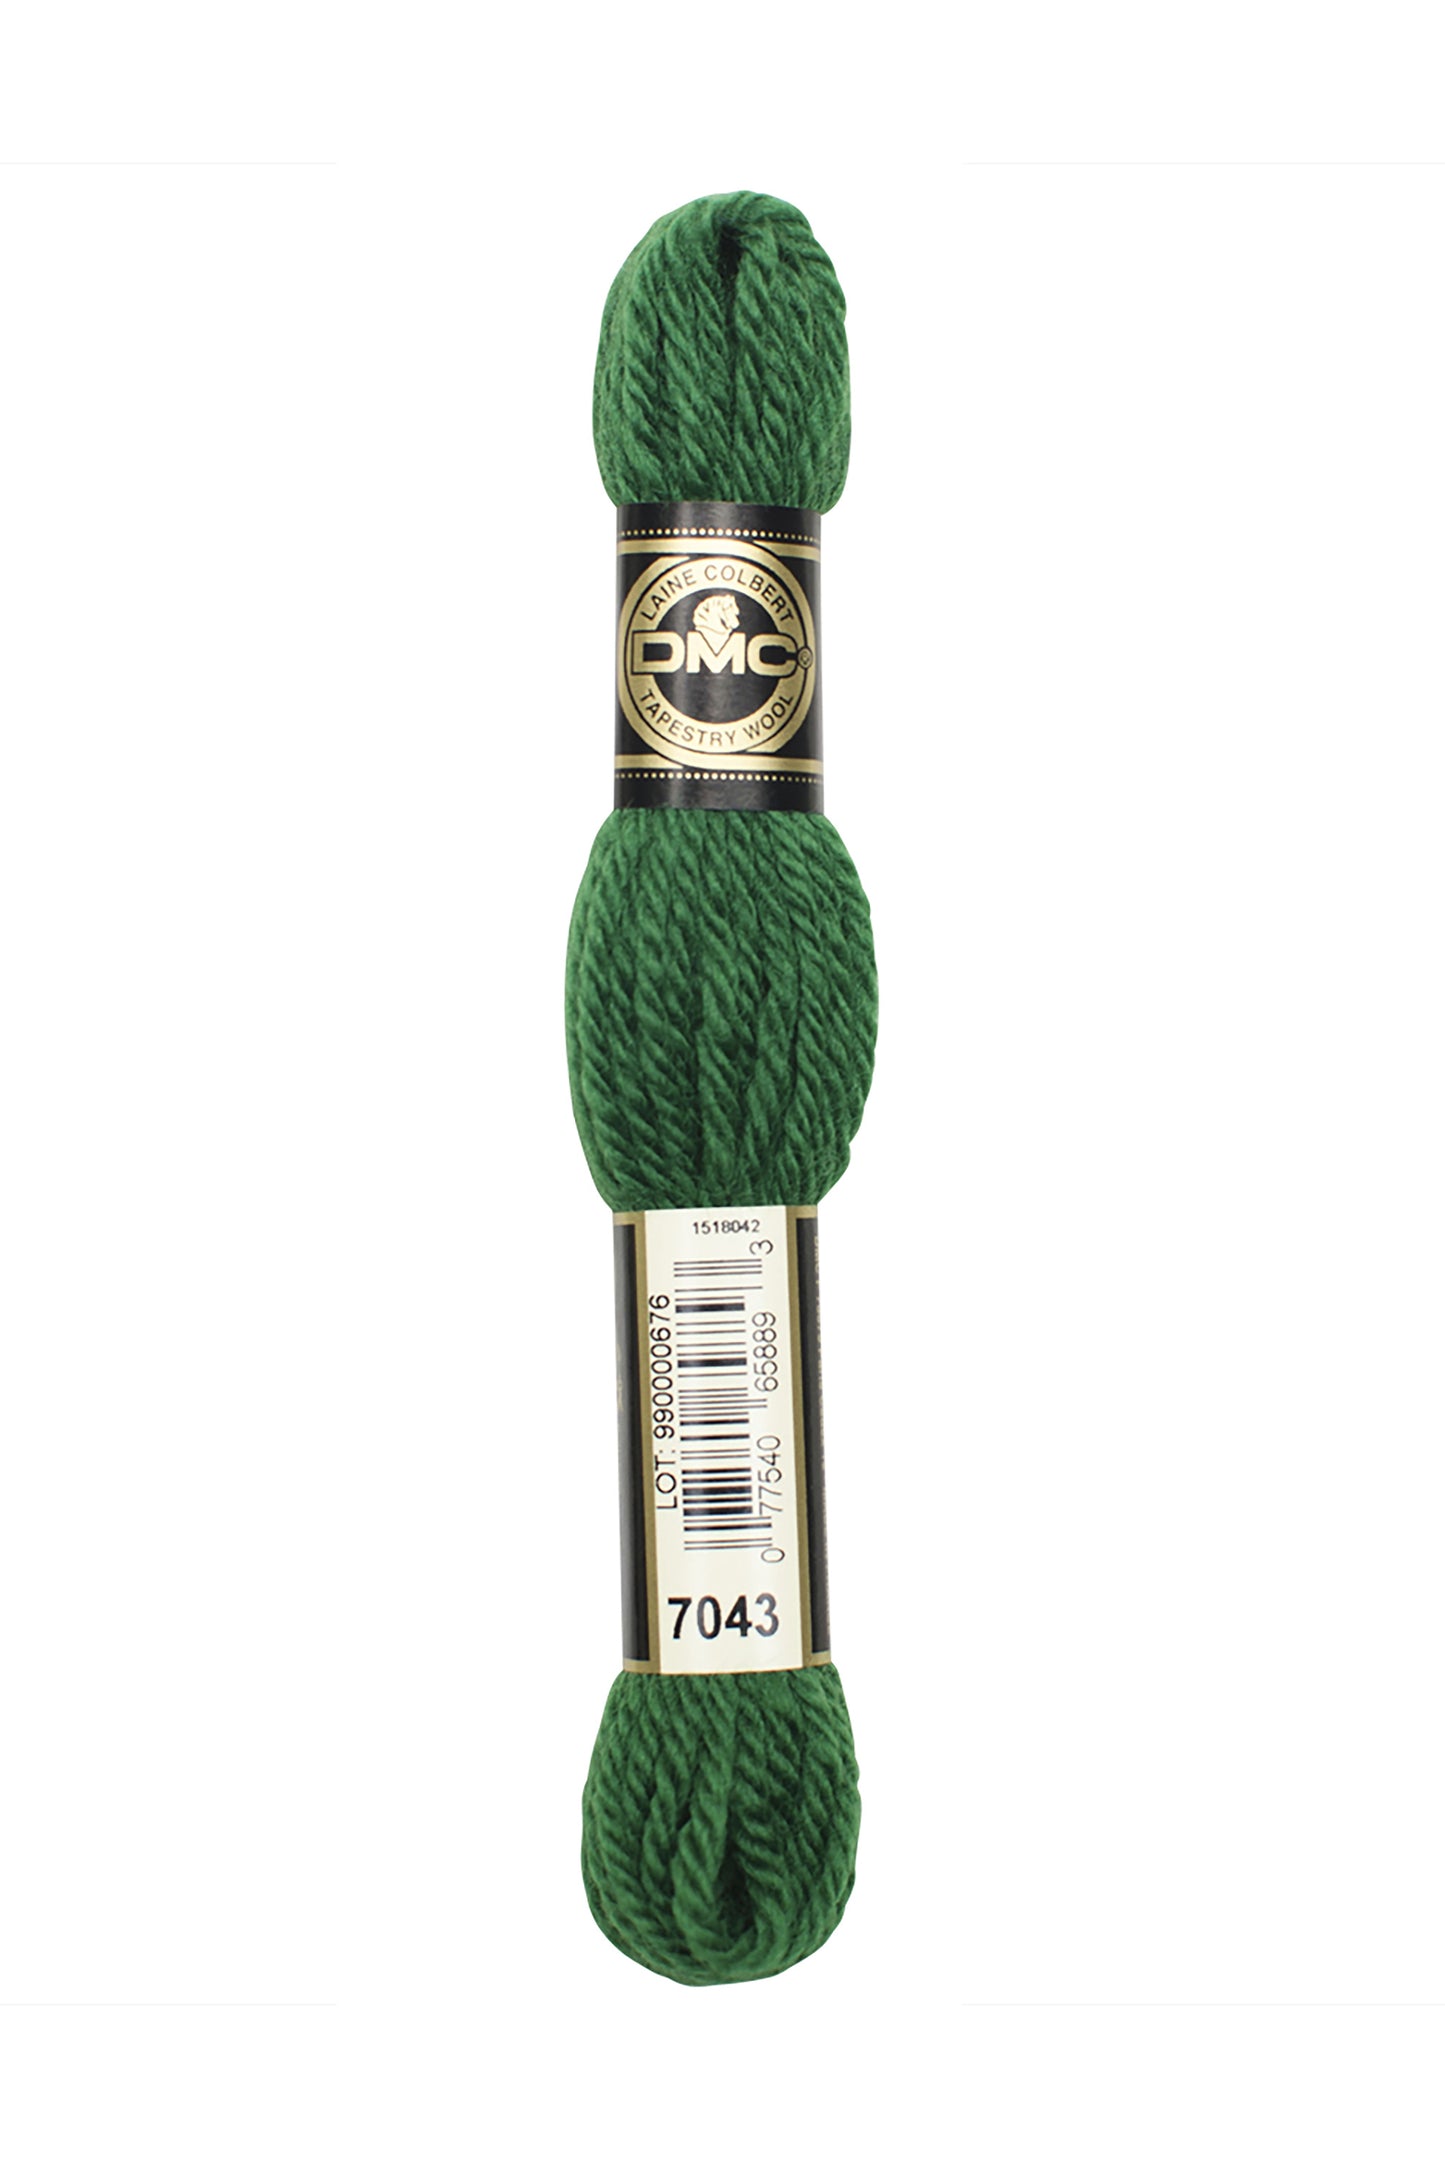 7043 – DMC Tapestry Wool